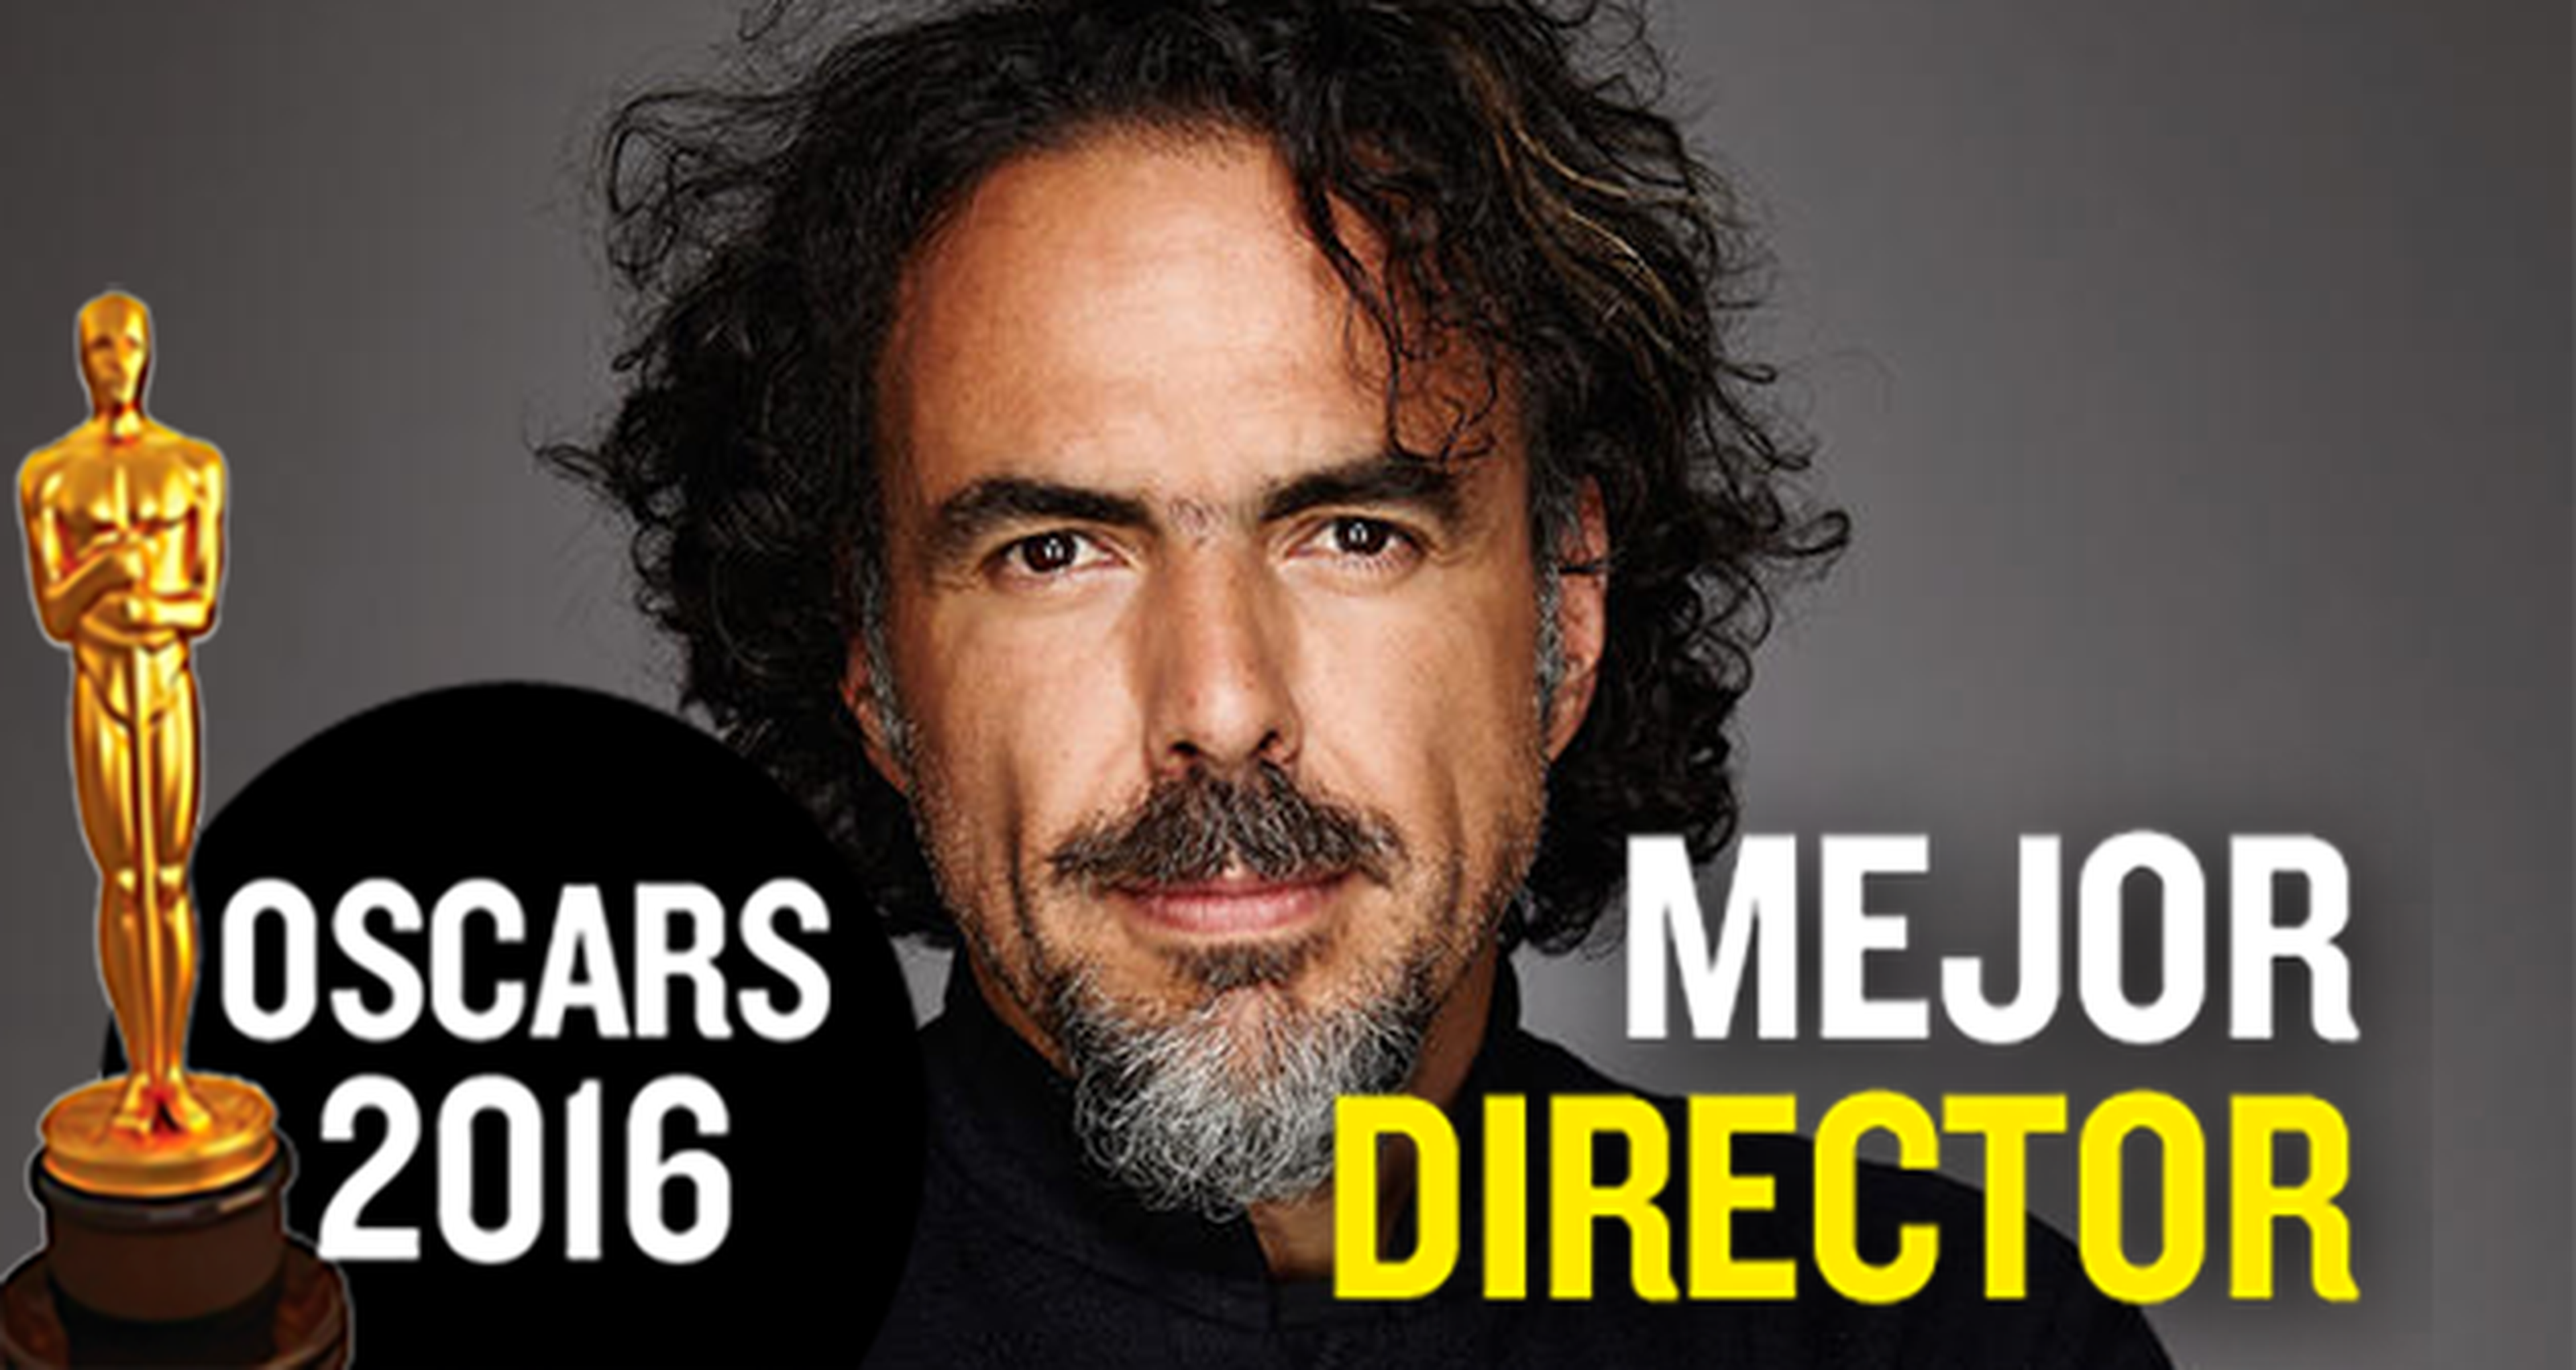 Oscars 2016 - Alejando González Iñárritu es el mejor director